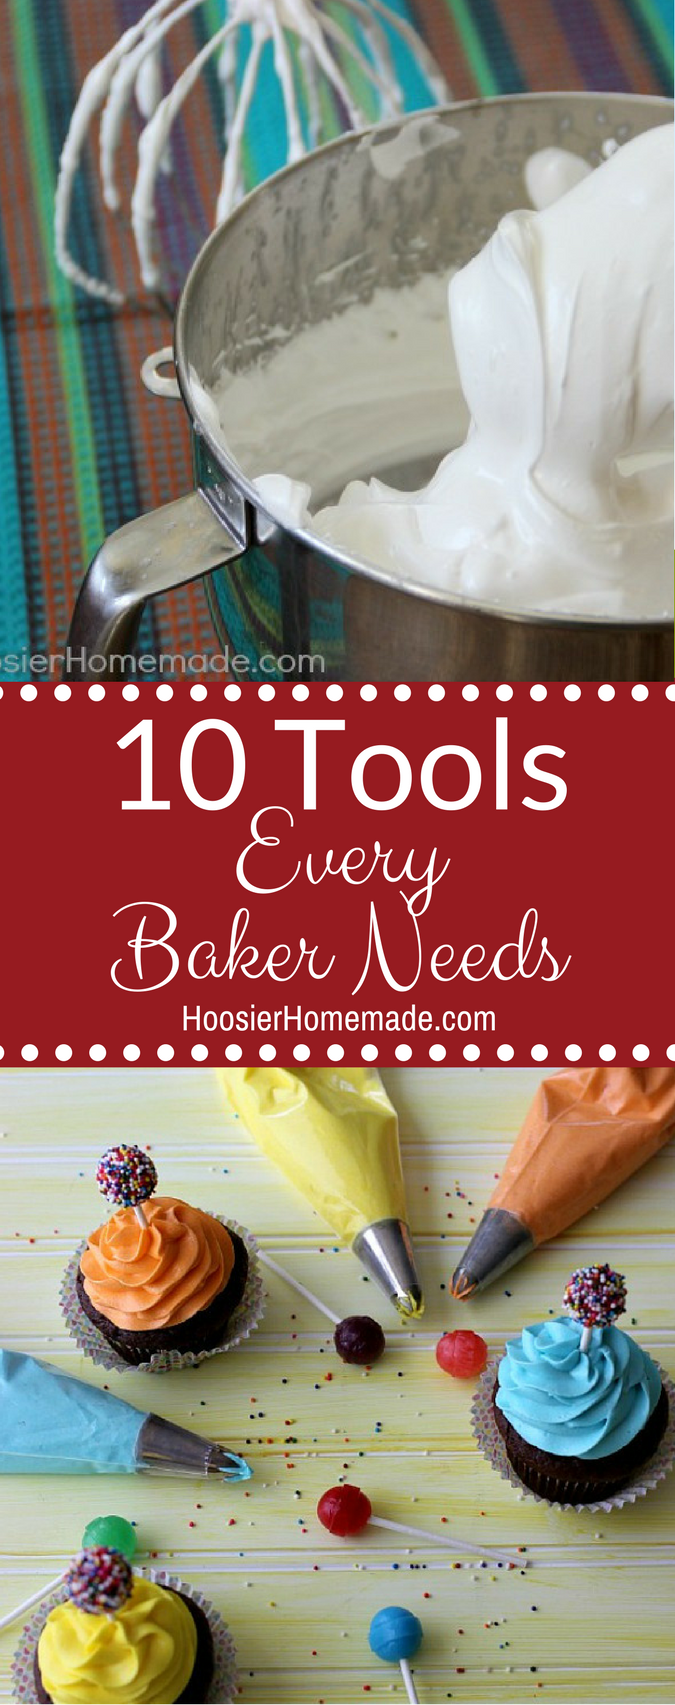 10 Tools Every Baker Needs